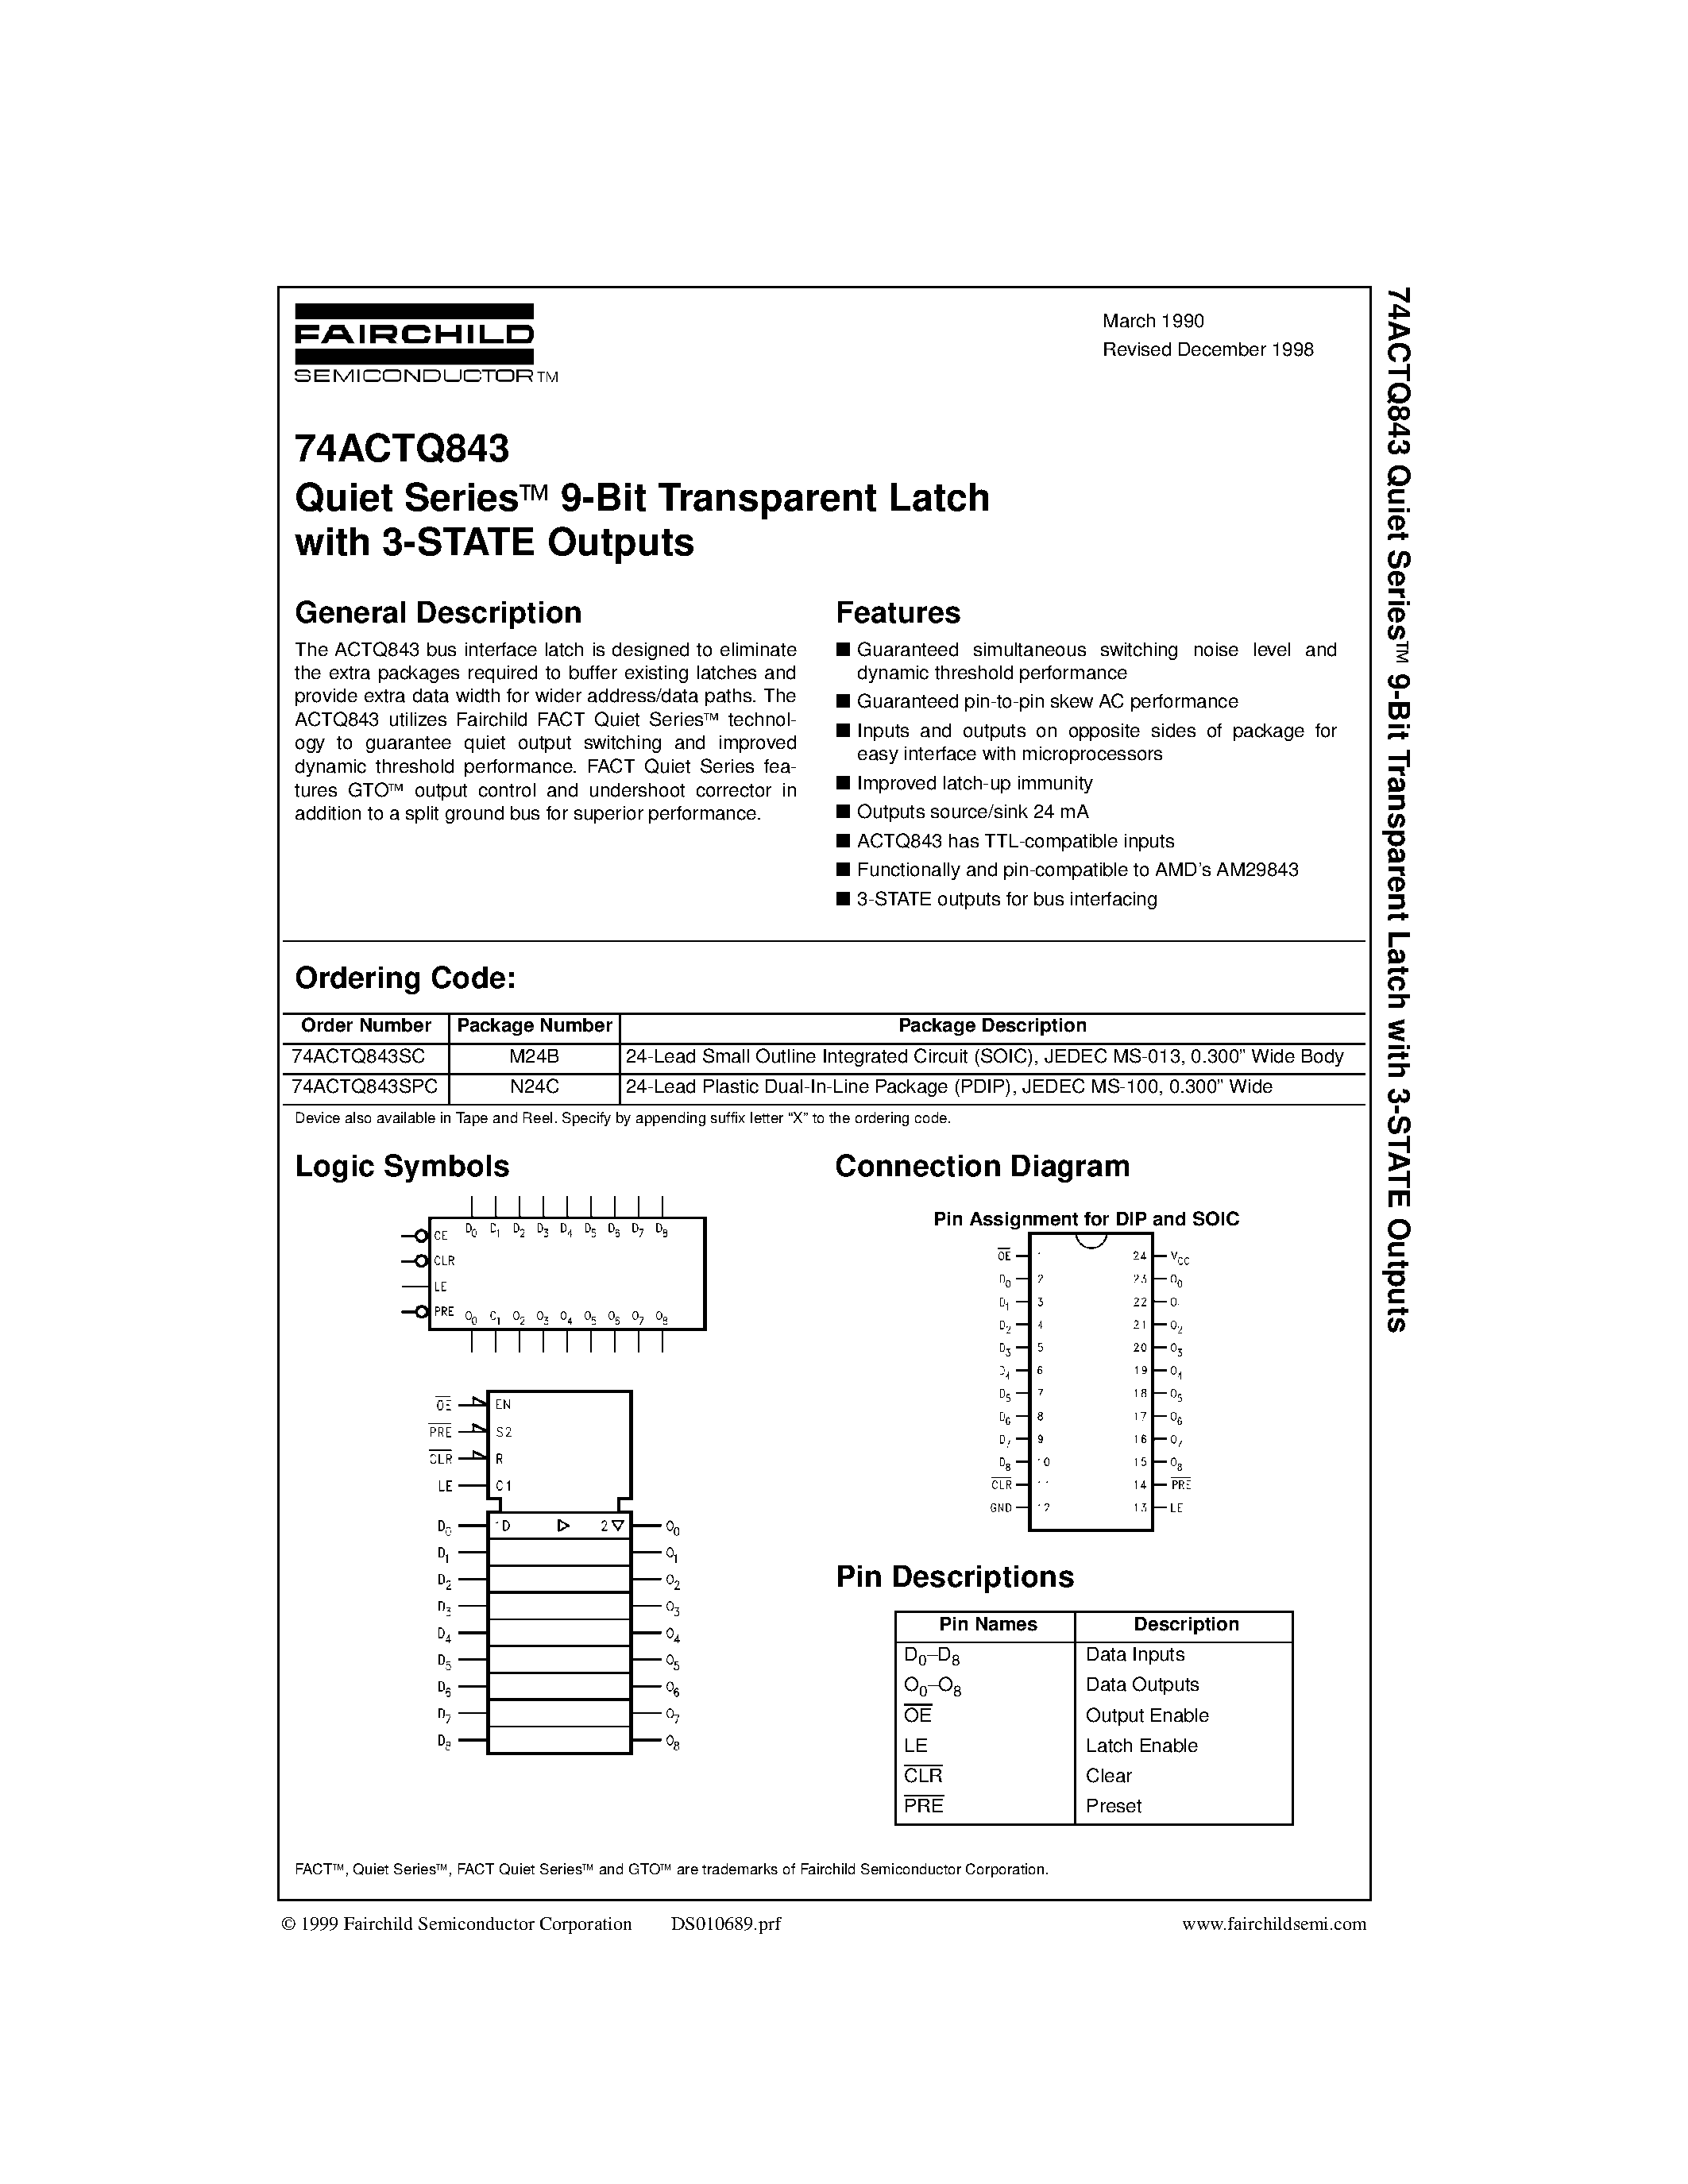 Даташит 74ACTQ843 - Quiet Seriesa 9-Bit Transparent Latch with 3-STATE Outputs страница 1